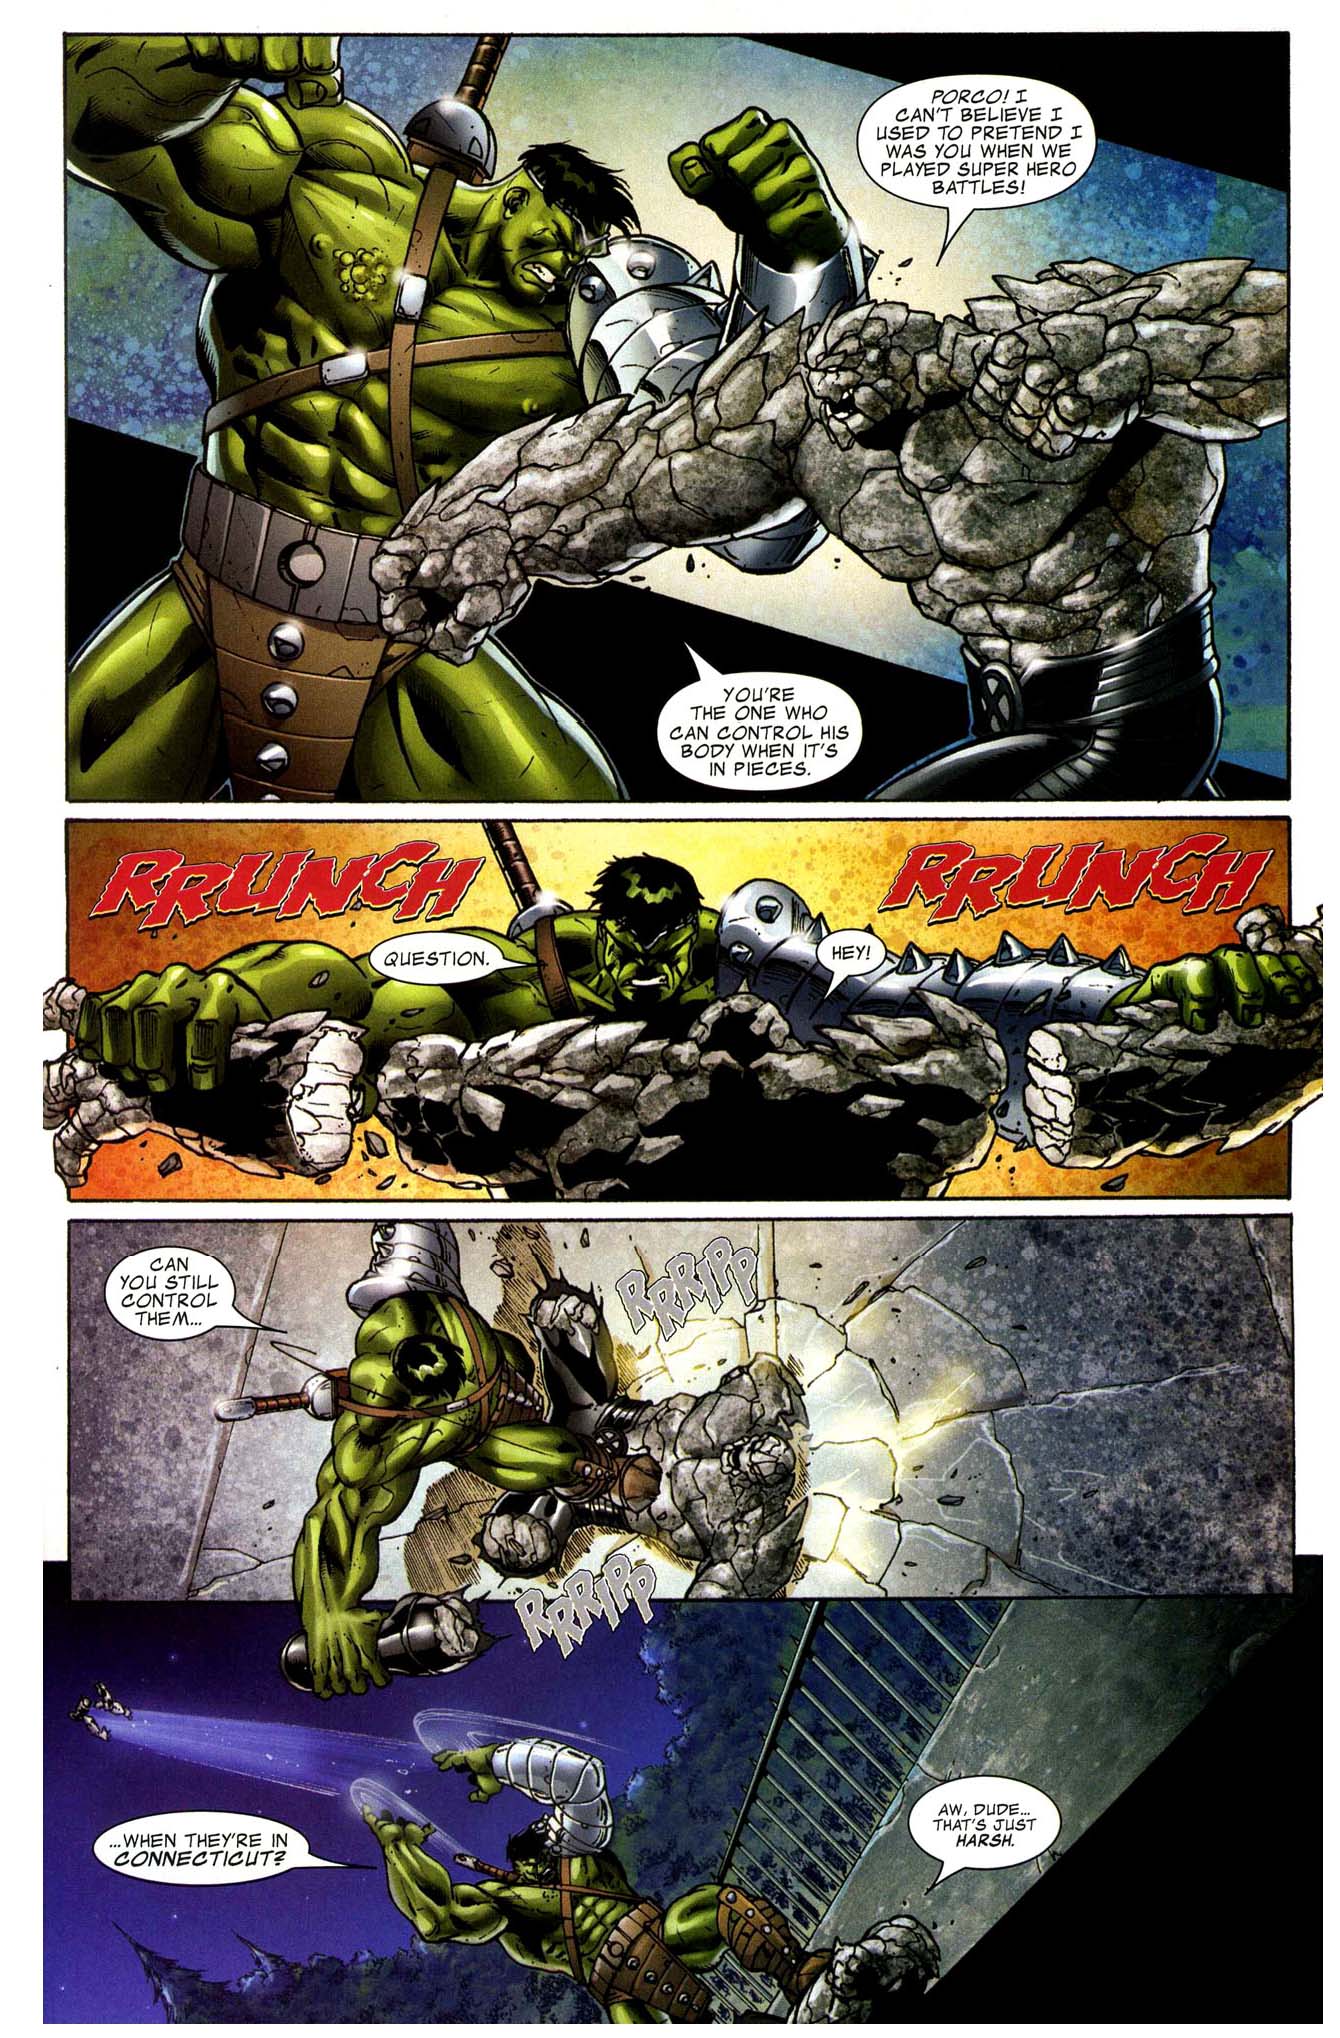 hulk-vs-rockslide.jpg